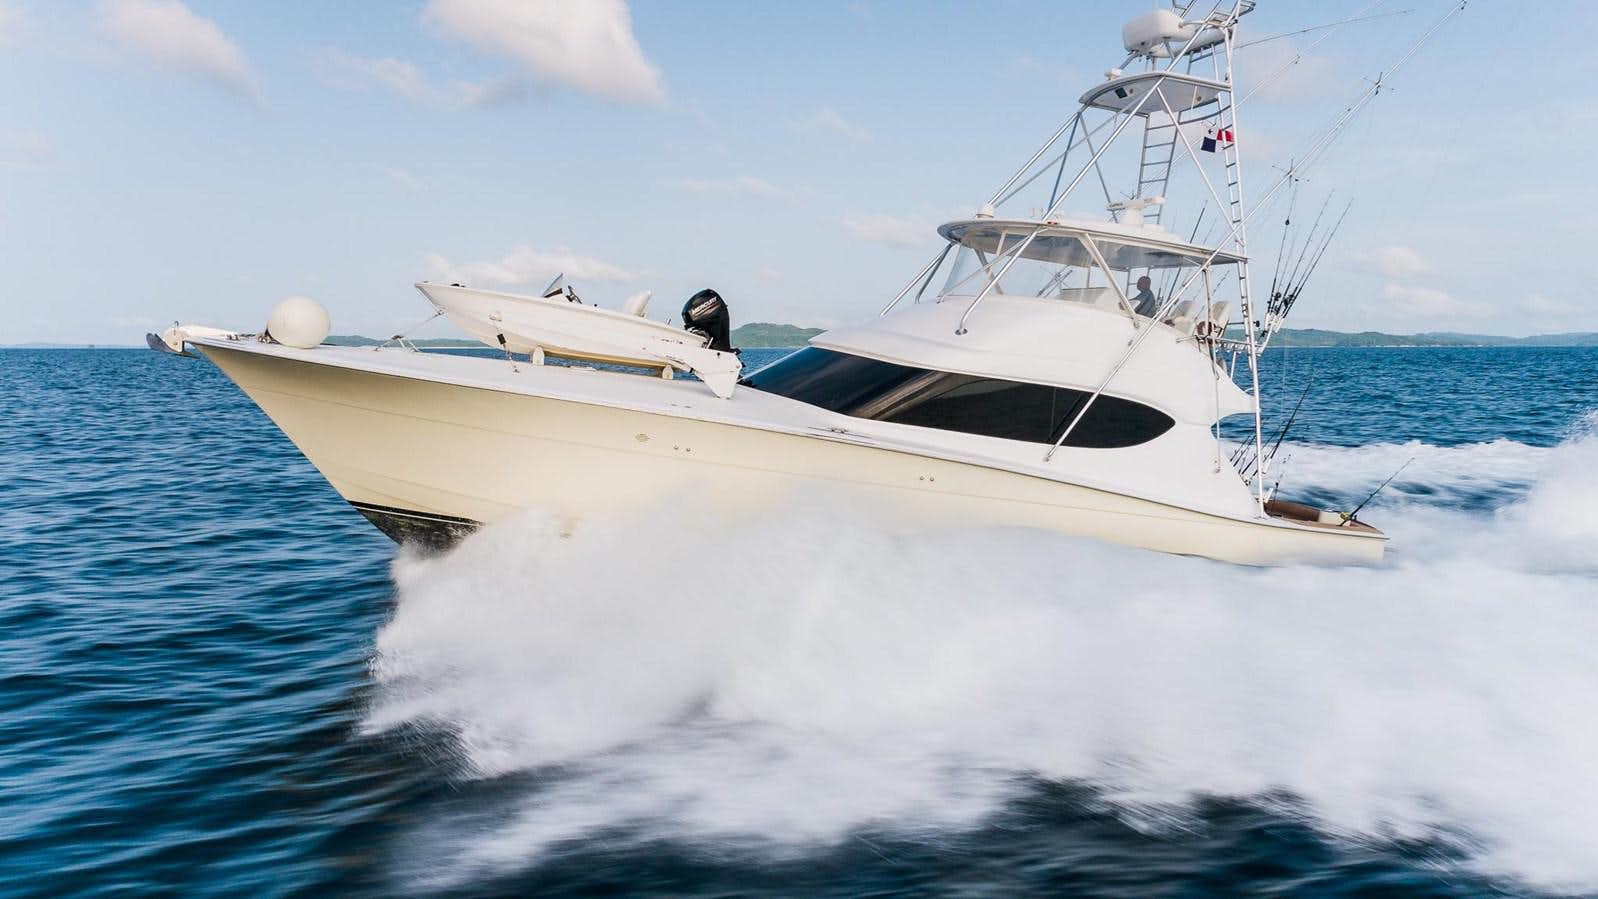 Sea hunter
Yacht for Sale